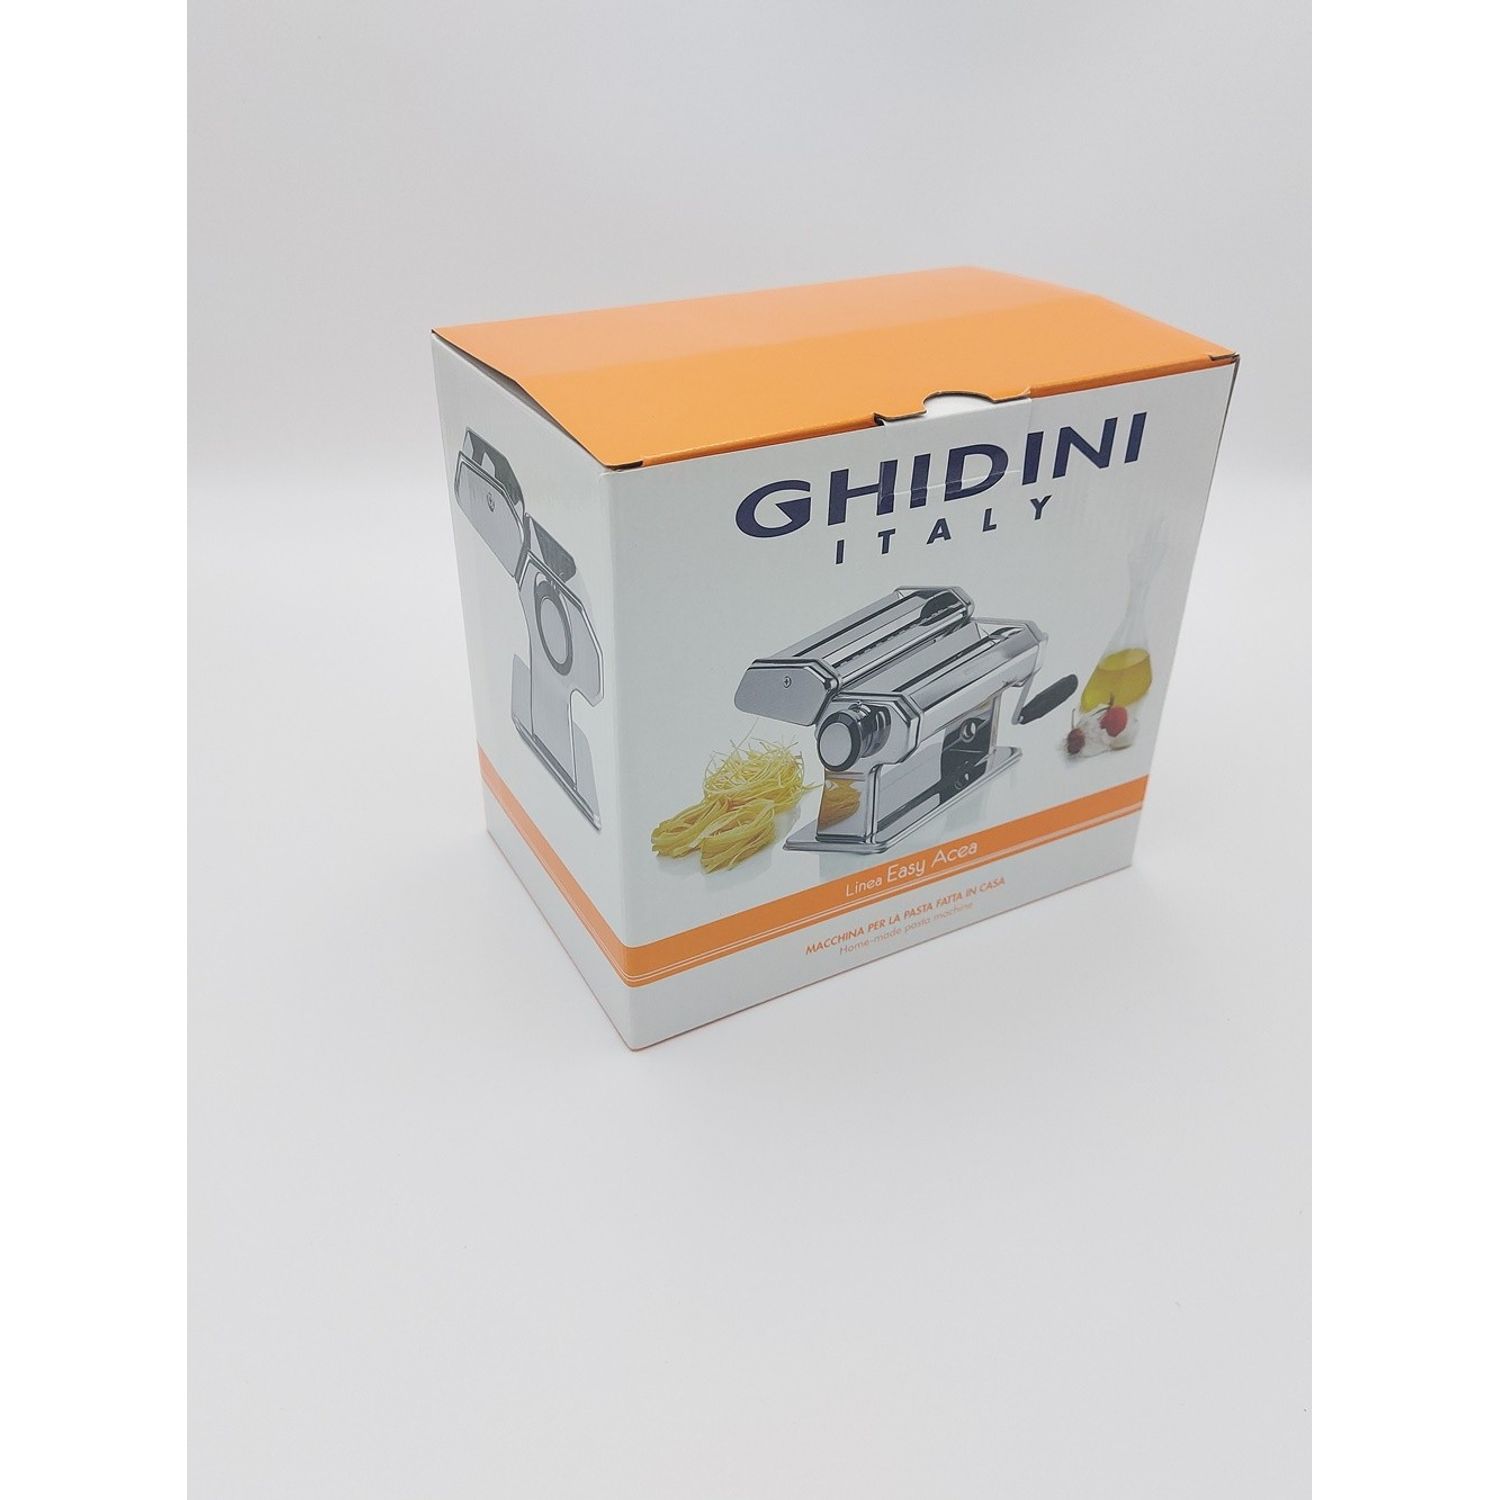 GHIDINI - Masina paste Ghidini Italia, inox, role aluminiu 